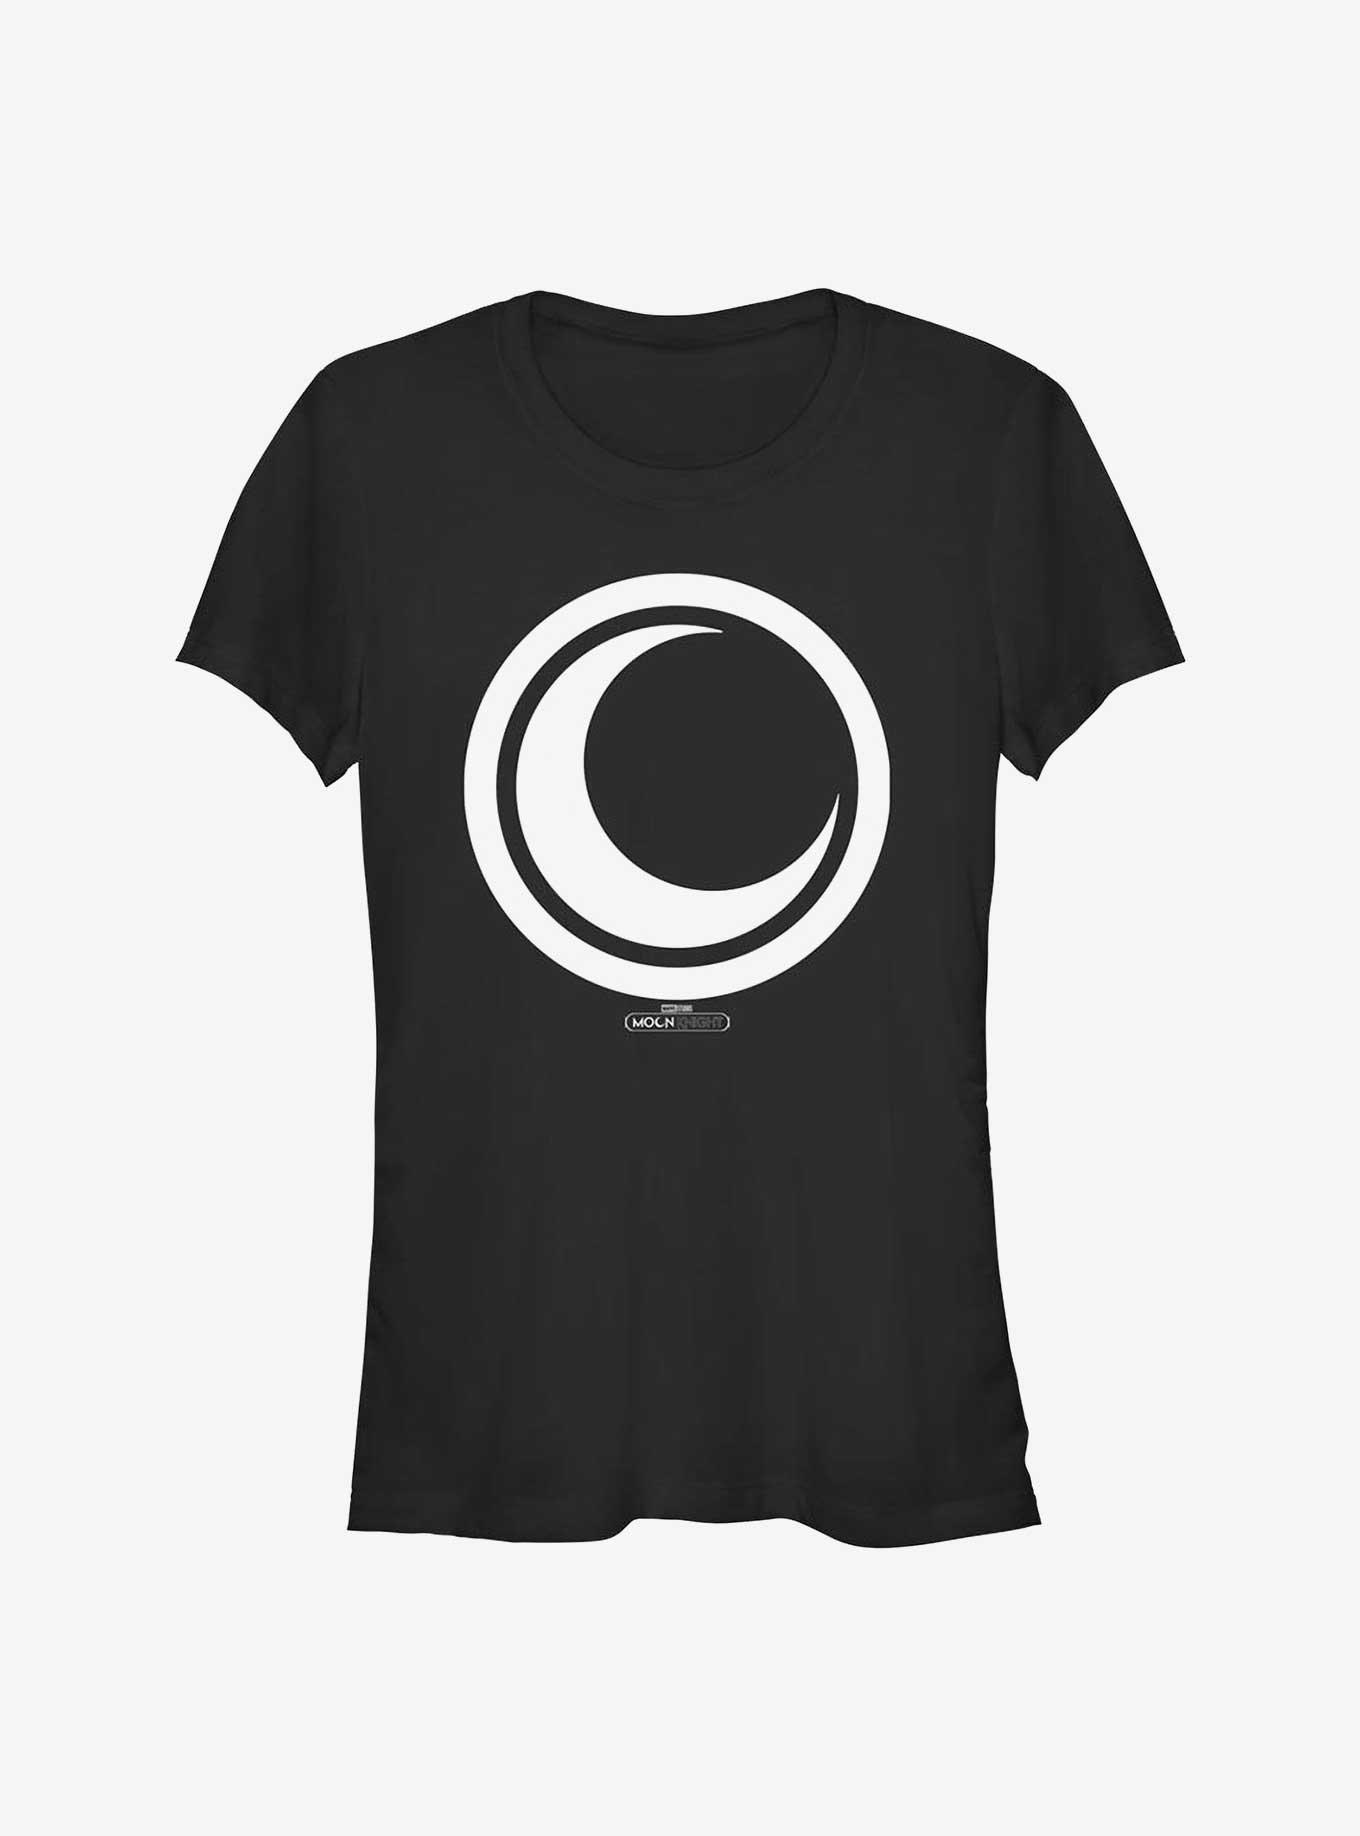 Marvel Moon Knight Crescent Icon Girls T-Shirt